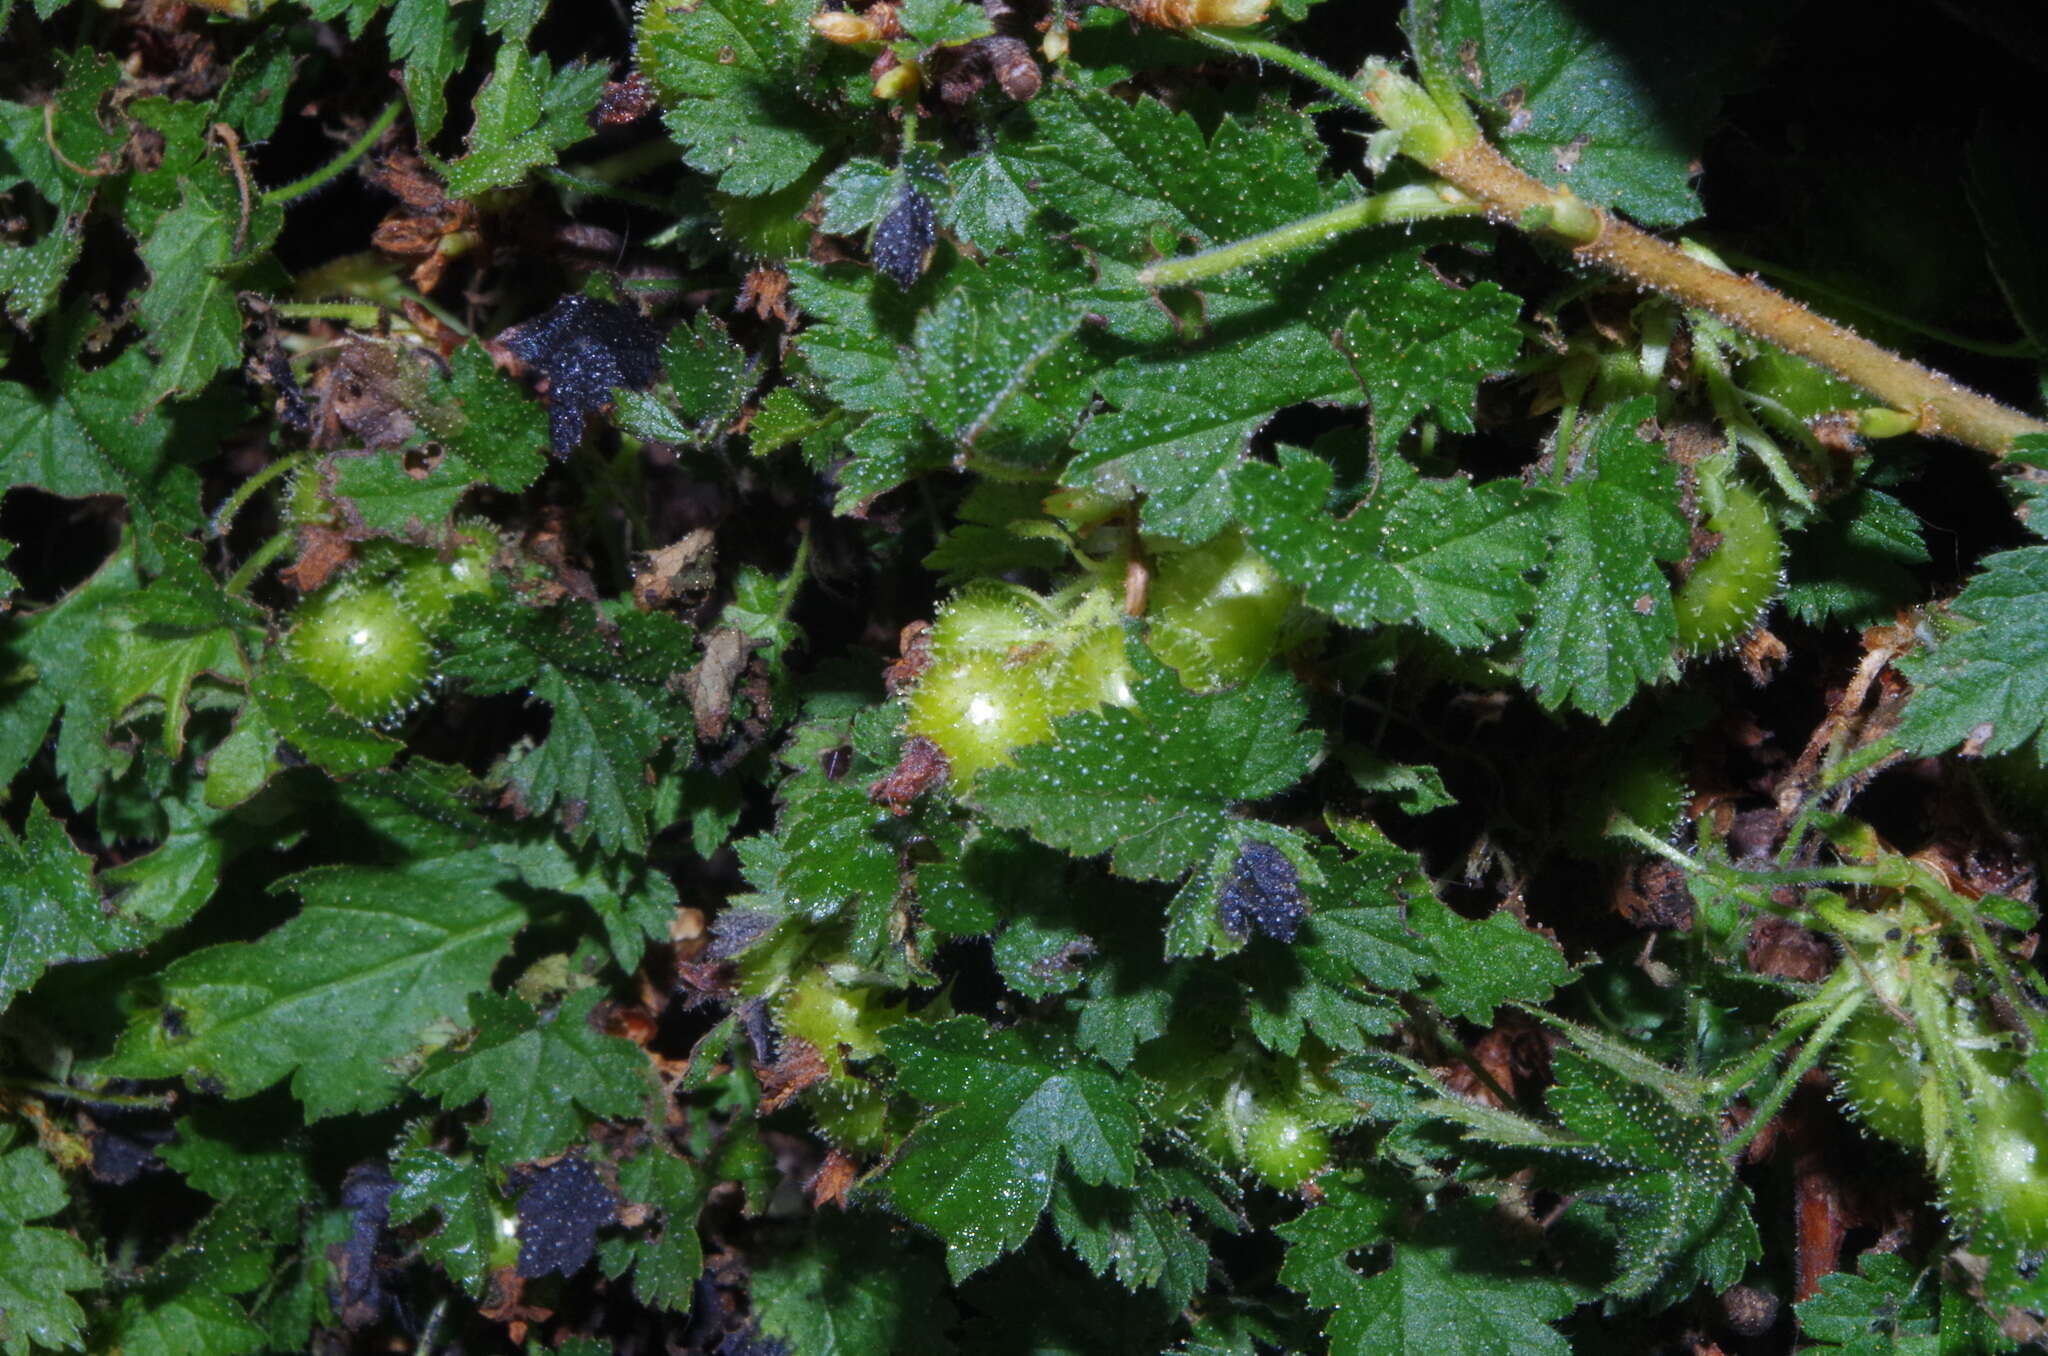 Image of Ribes brachybotrys (Weddell) Jancz.